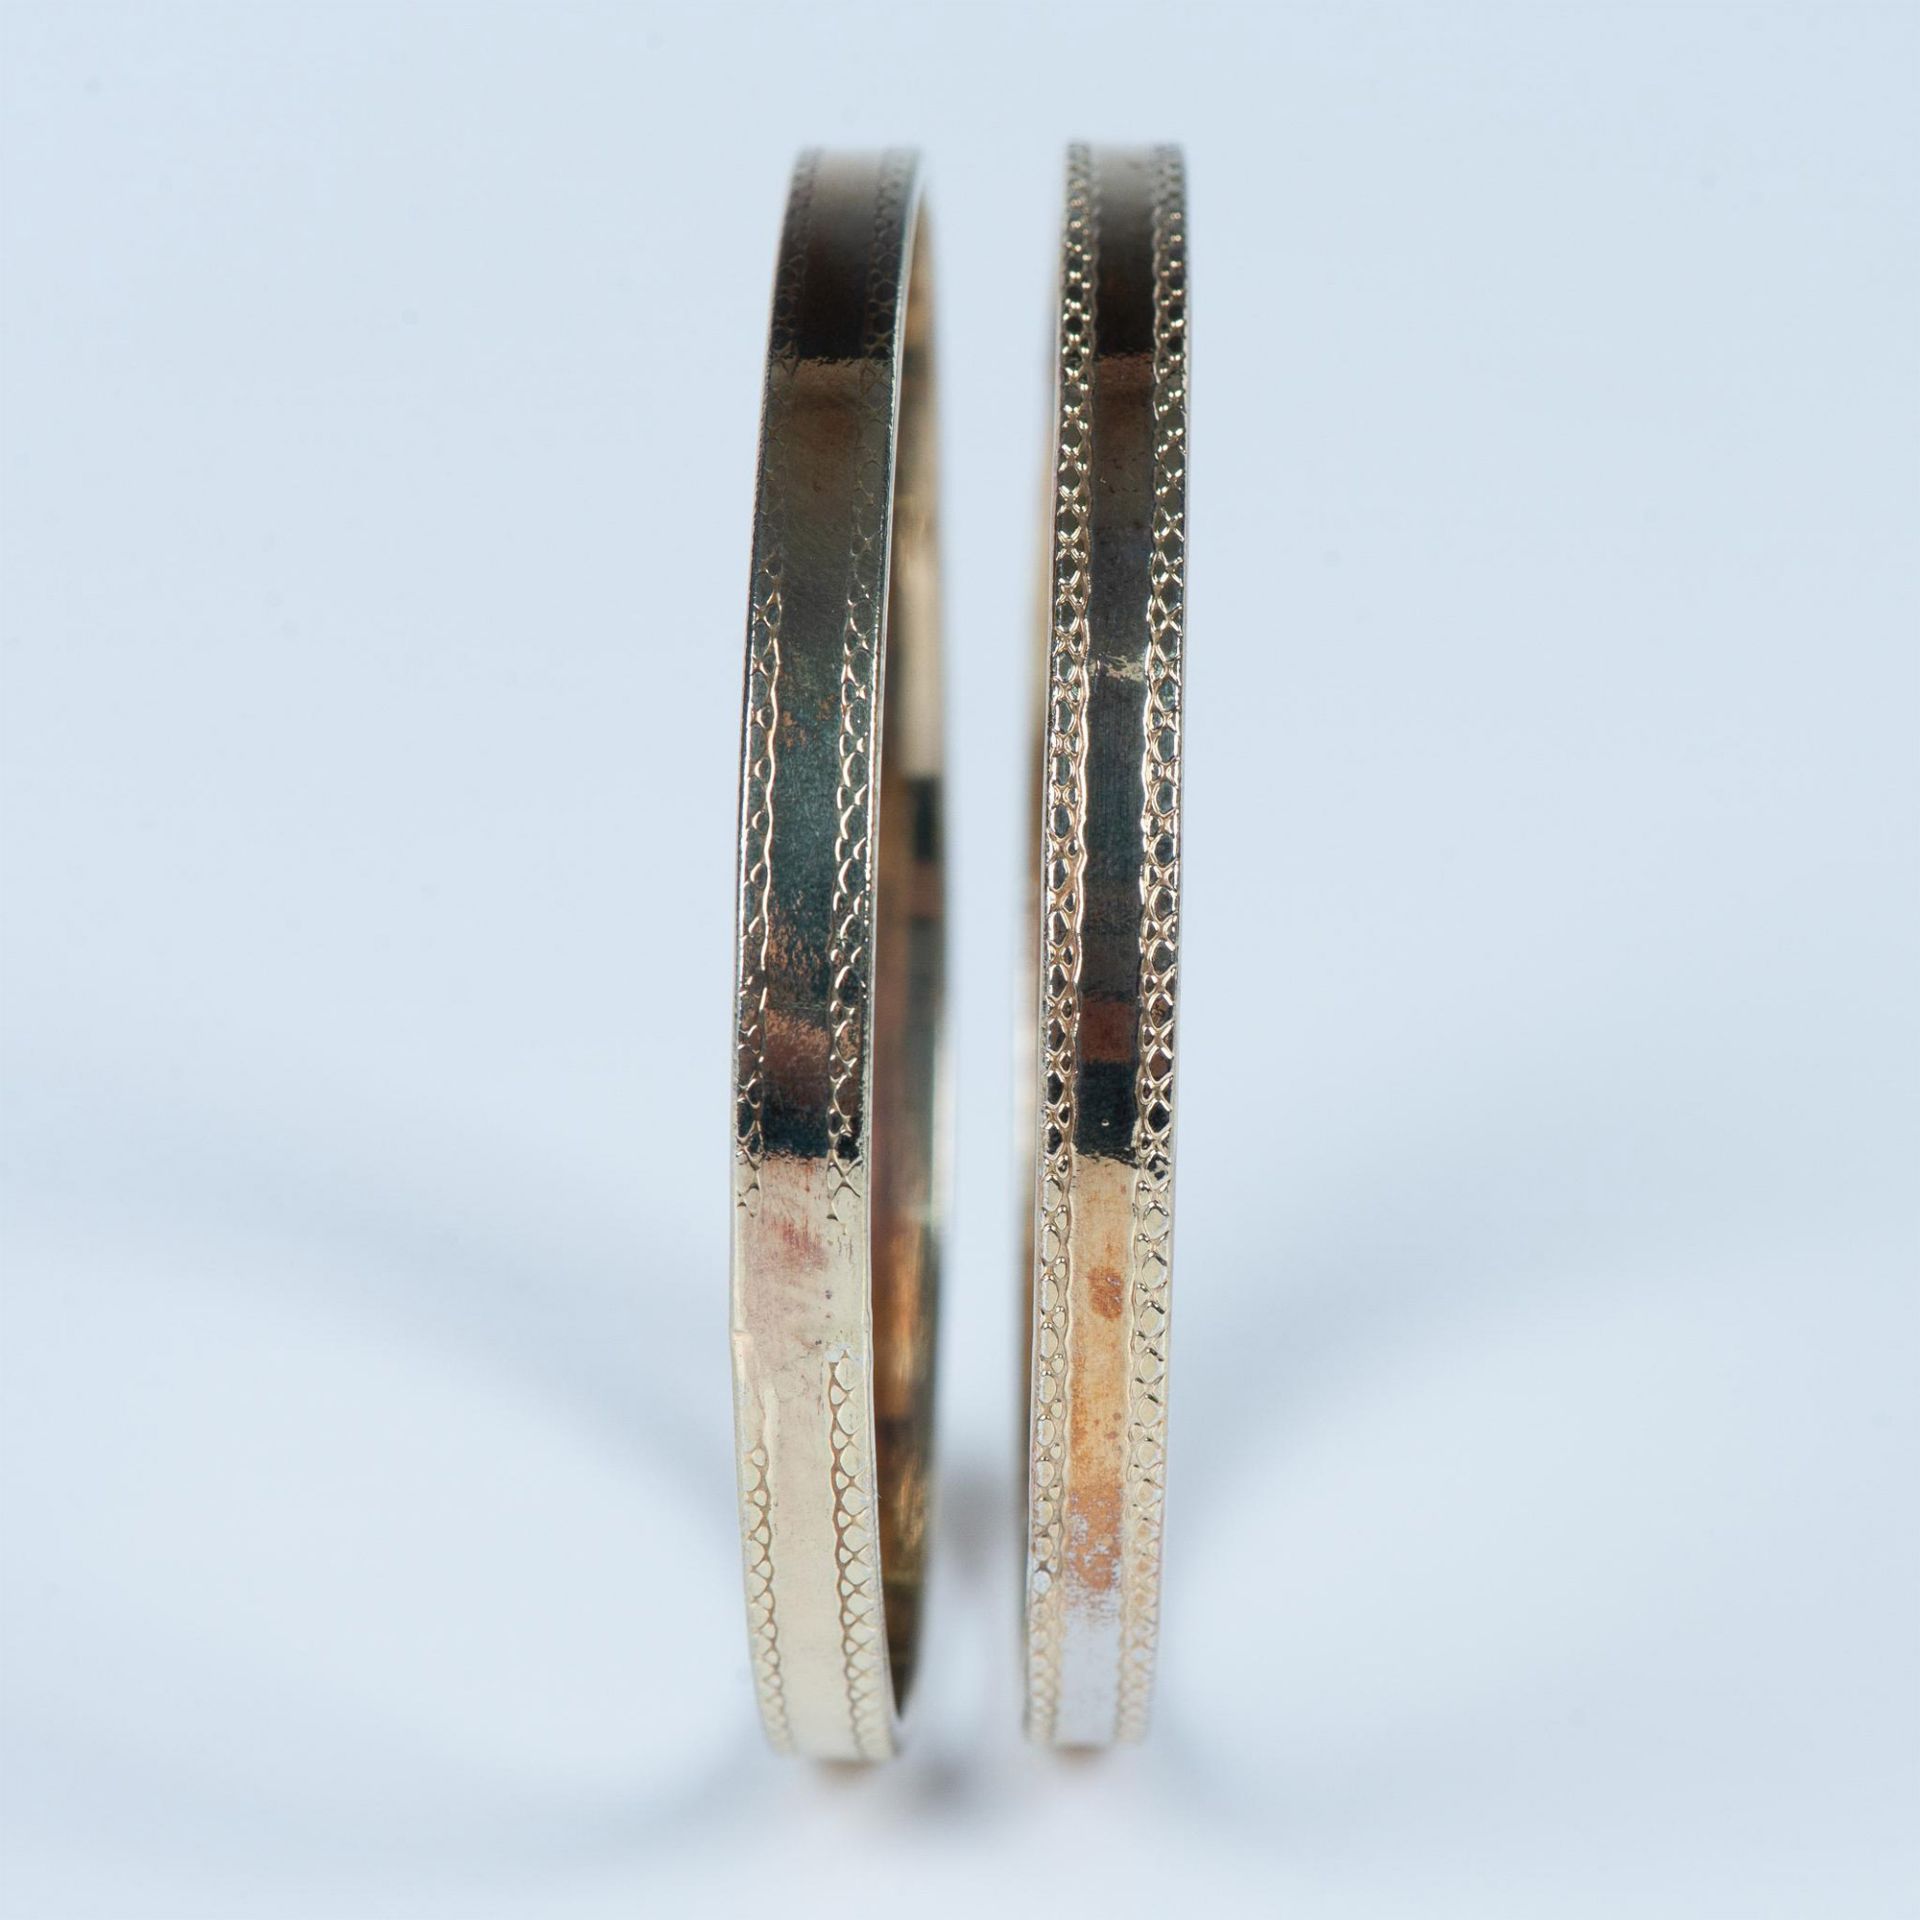 2pc Beautiful Gold Washed Silver Bangle Bracelets - Image 4 of 4